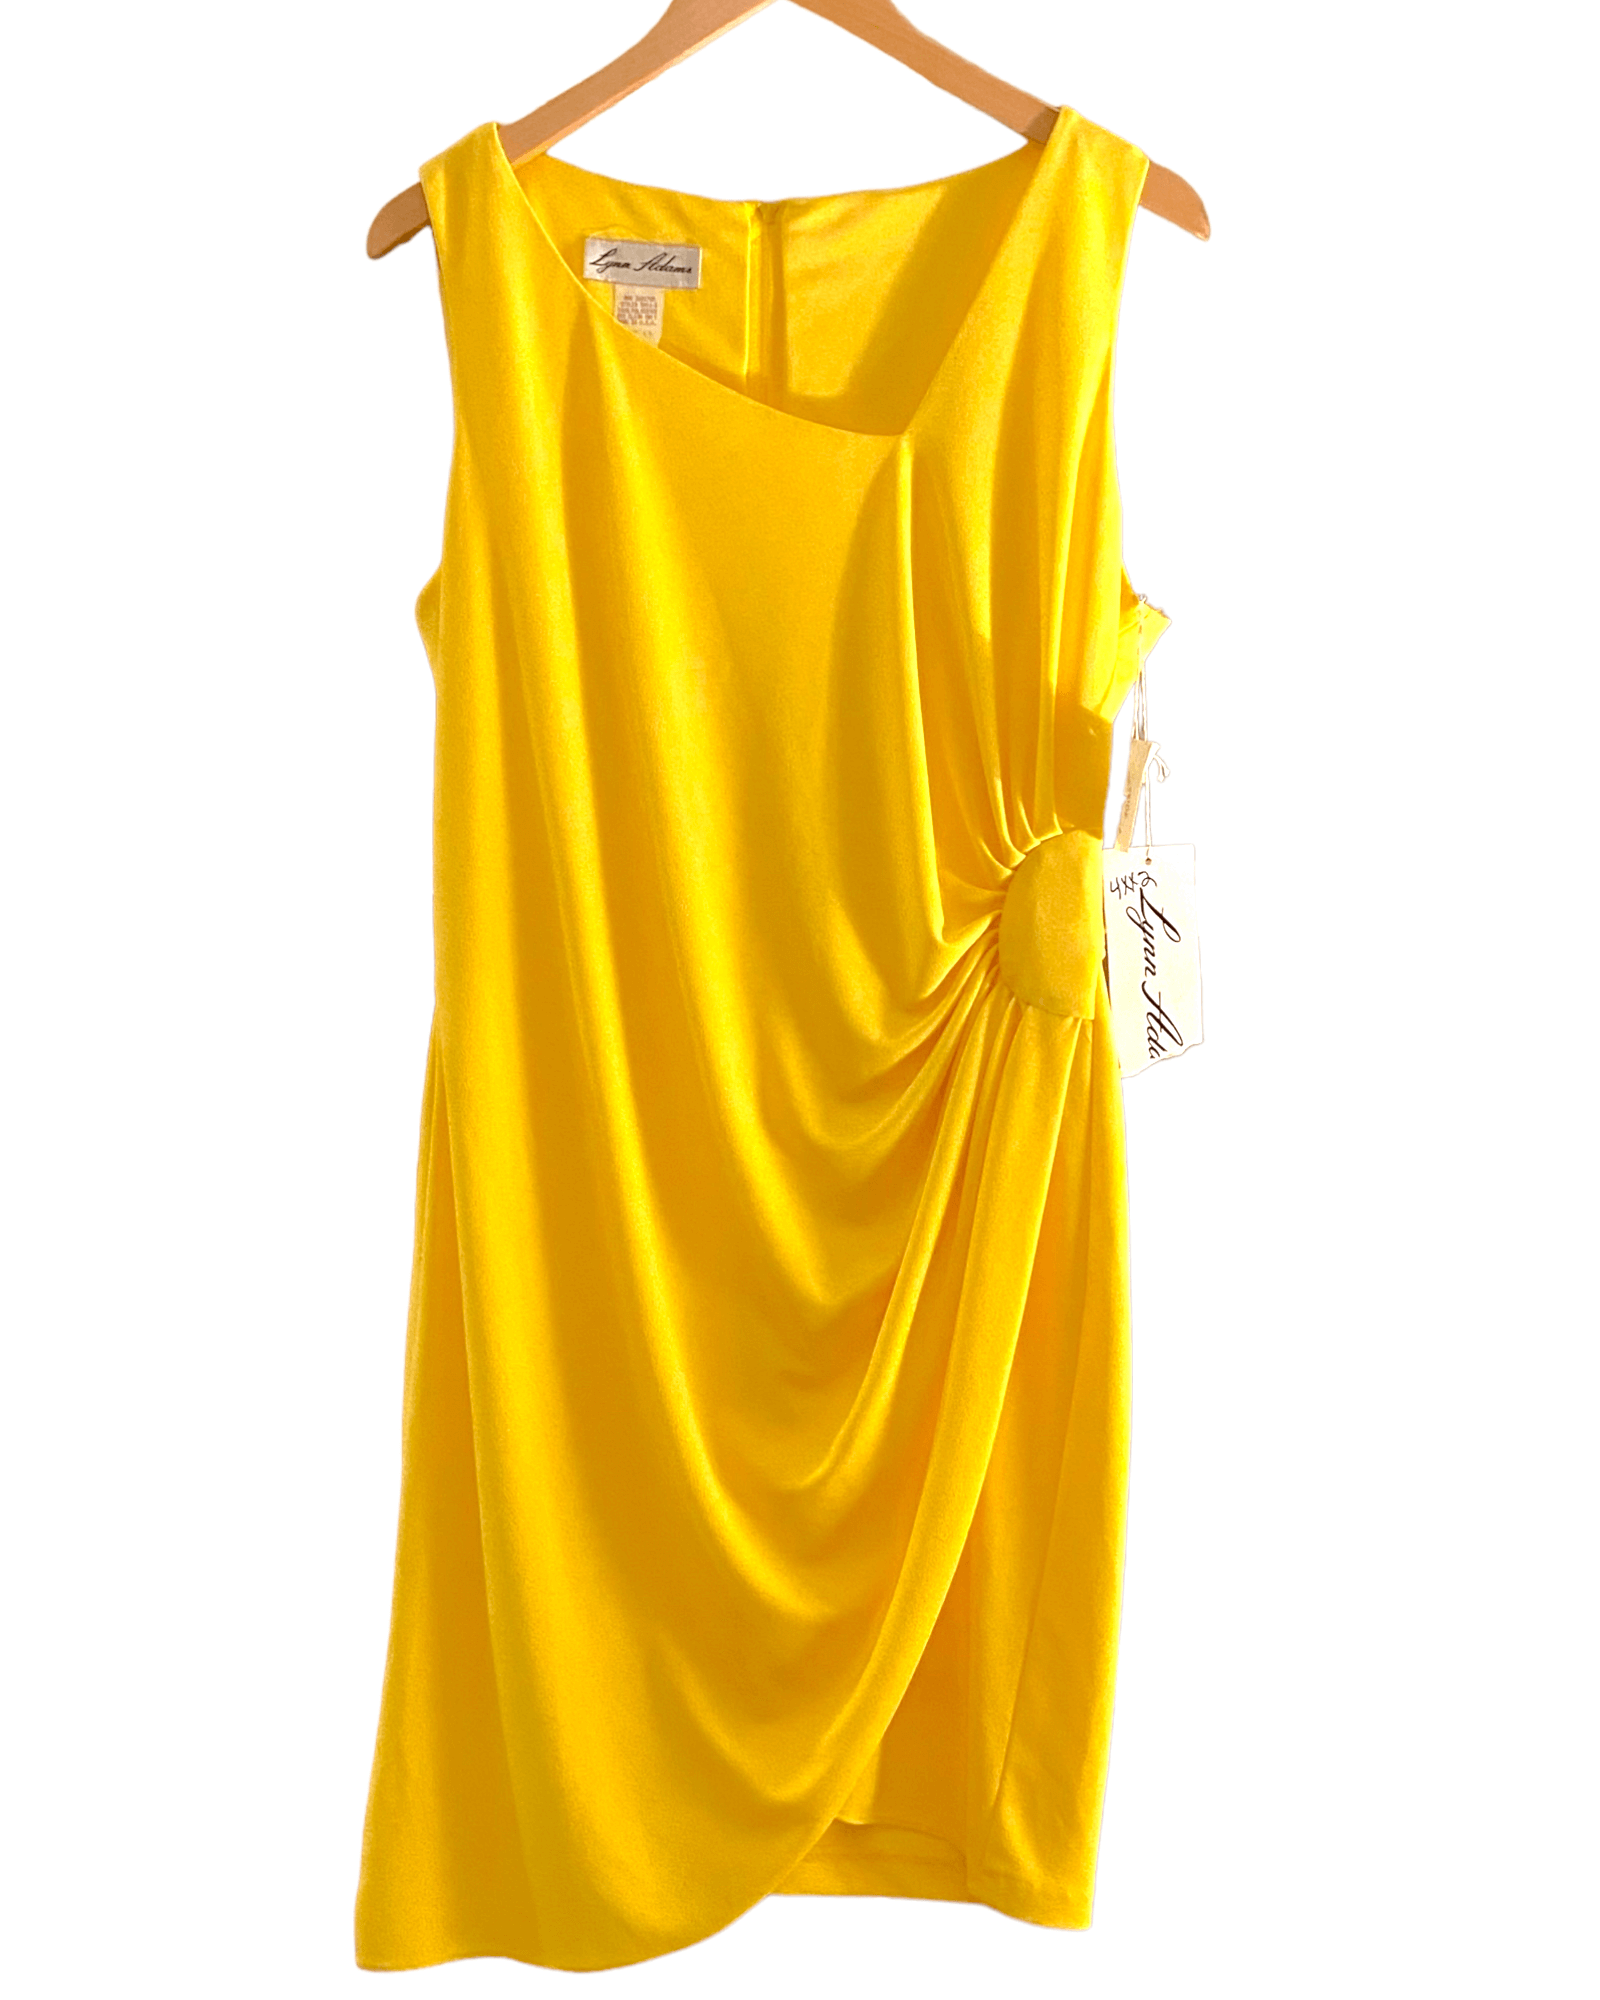 Bright Winter LYNN ADAMS vintage 1970's yellow sunburst sheath dress